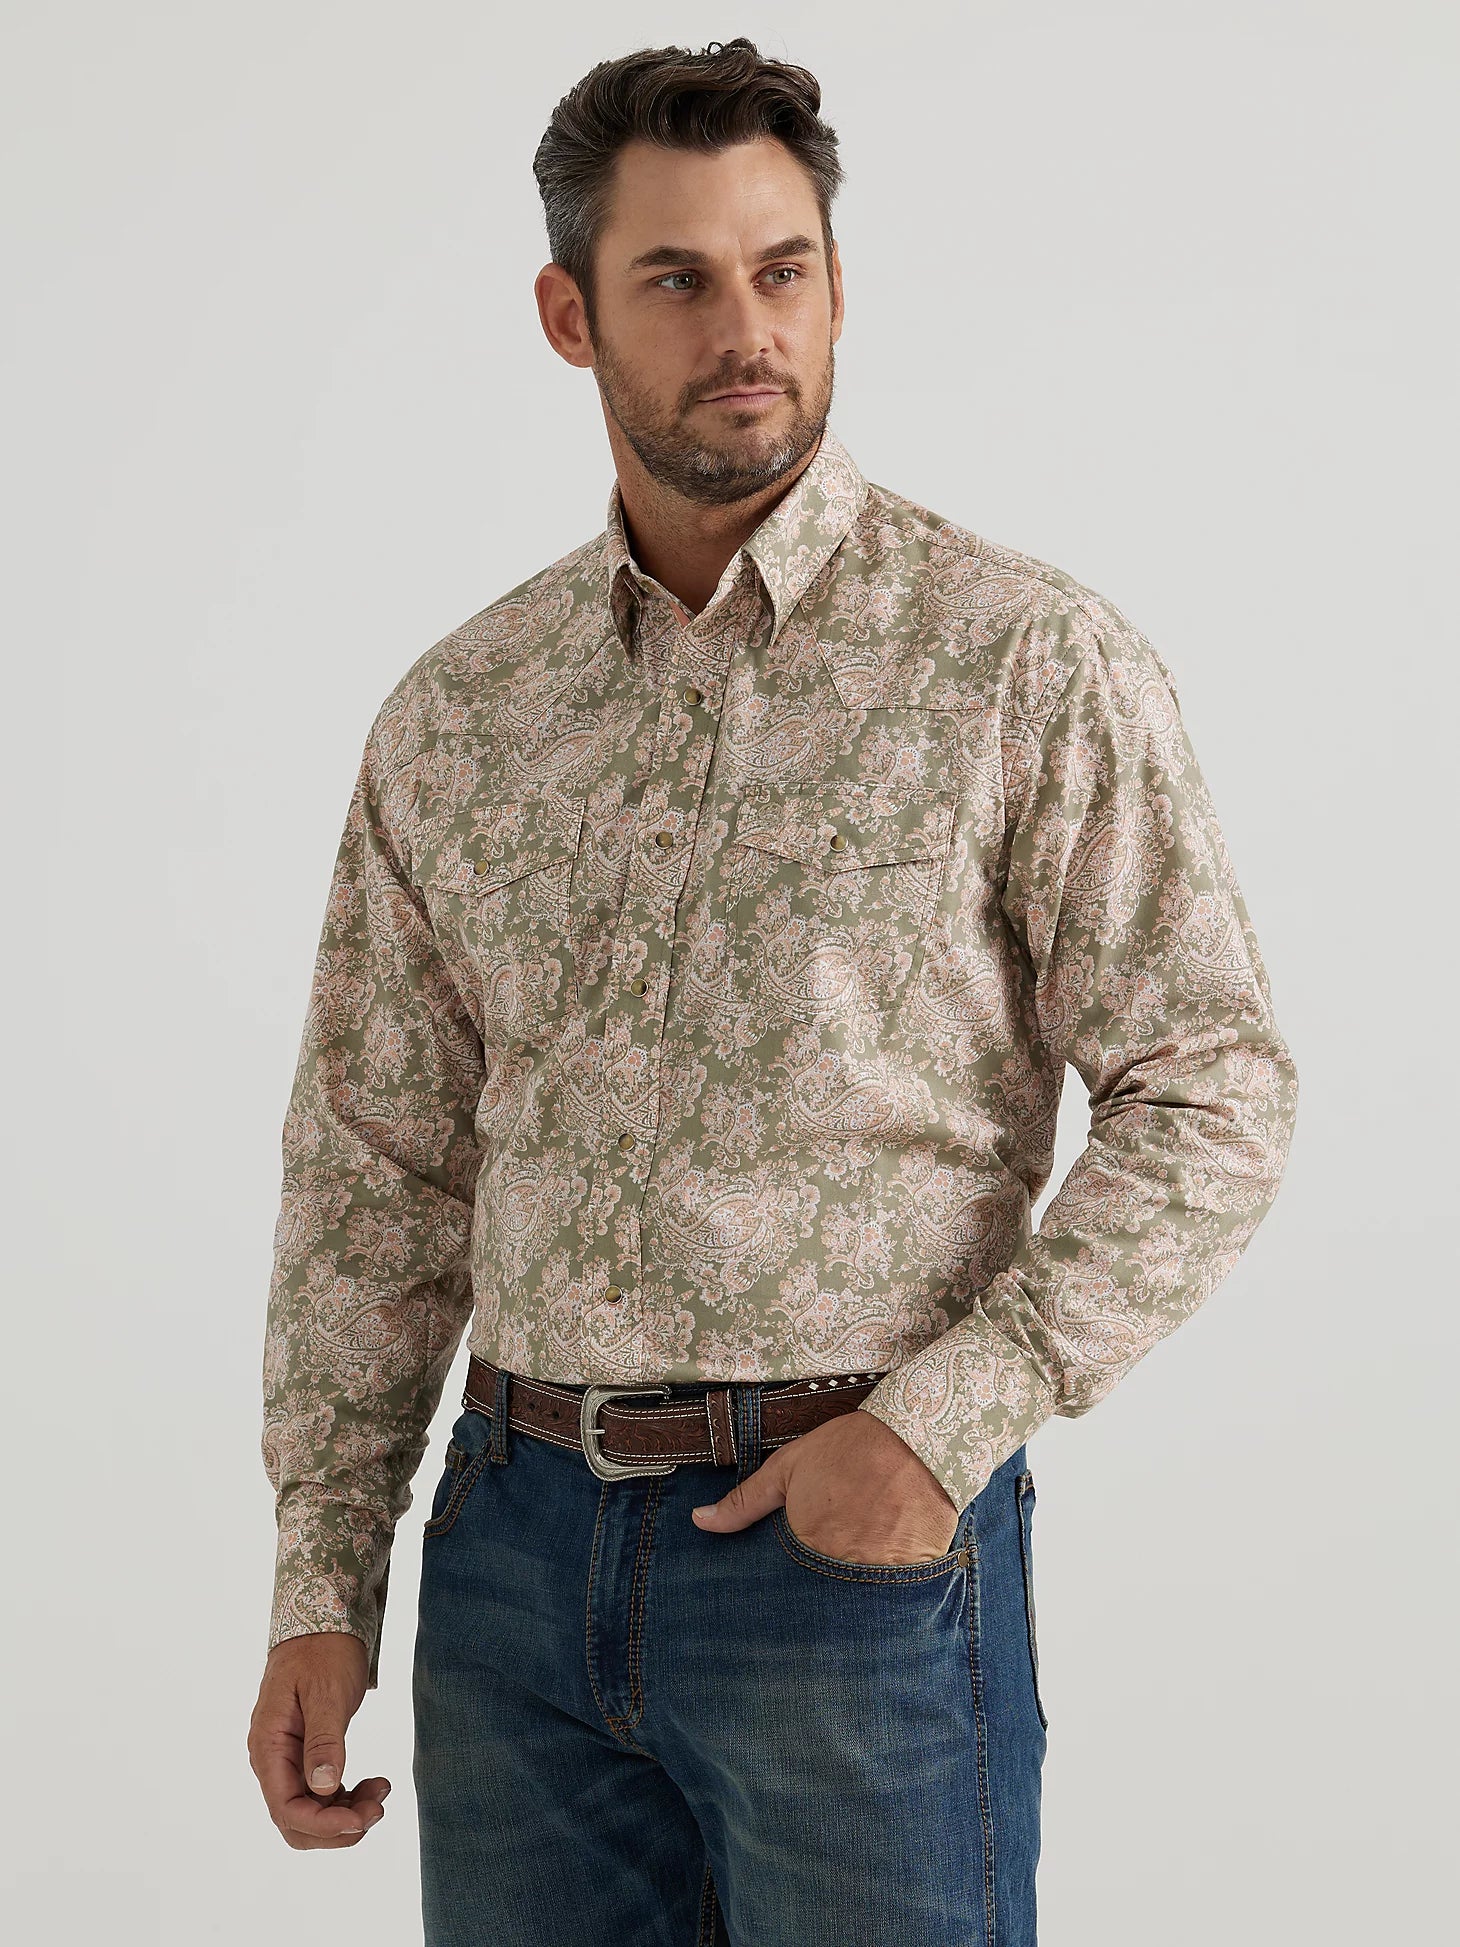 Wrangler Men's George Strait Troubadour Long-Sleeve Western Snap Shirt